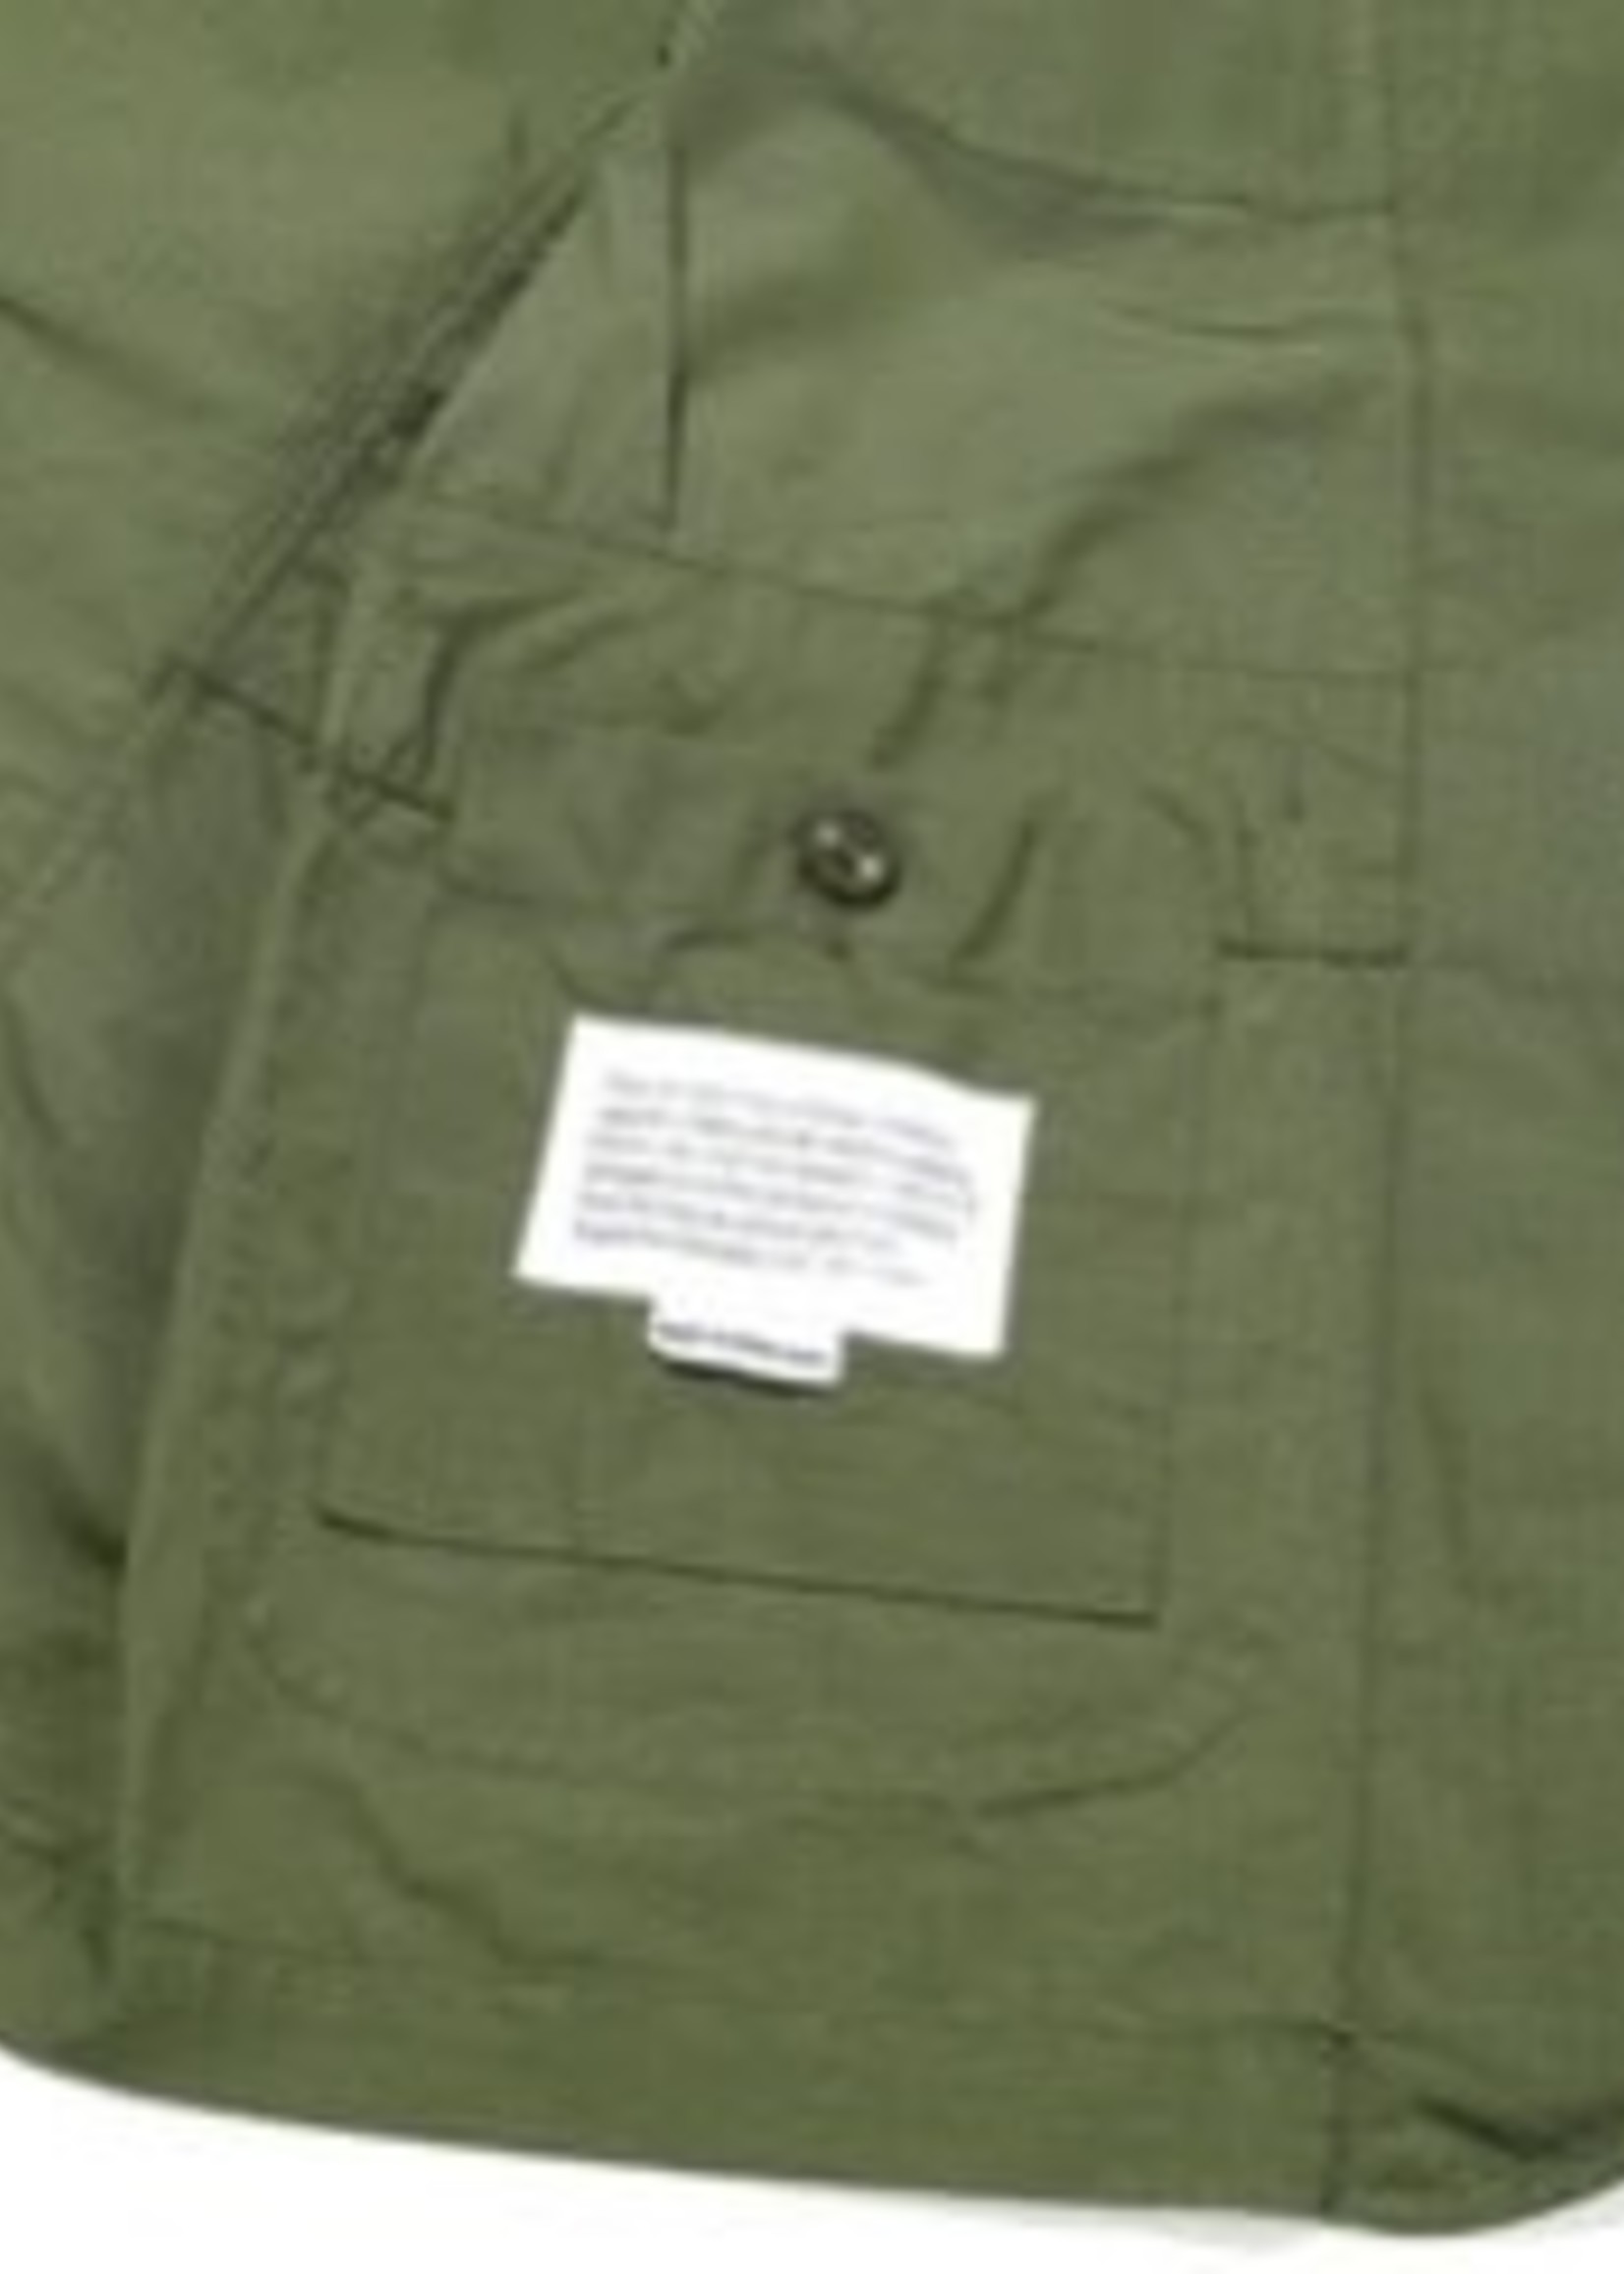 EG Bedford Jacket Olive Cotton Ripstop (22S1D005/CT010